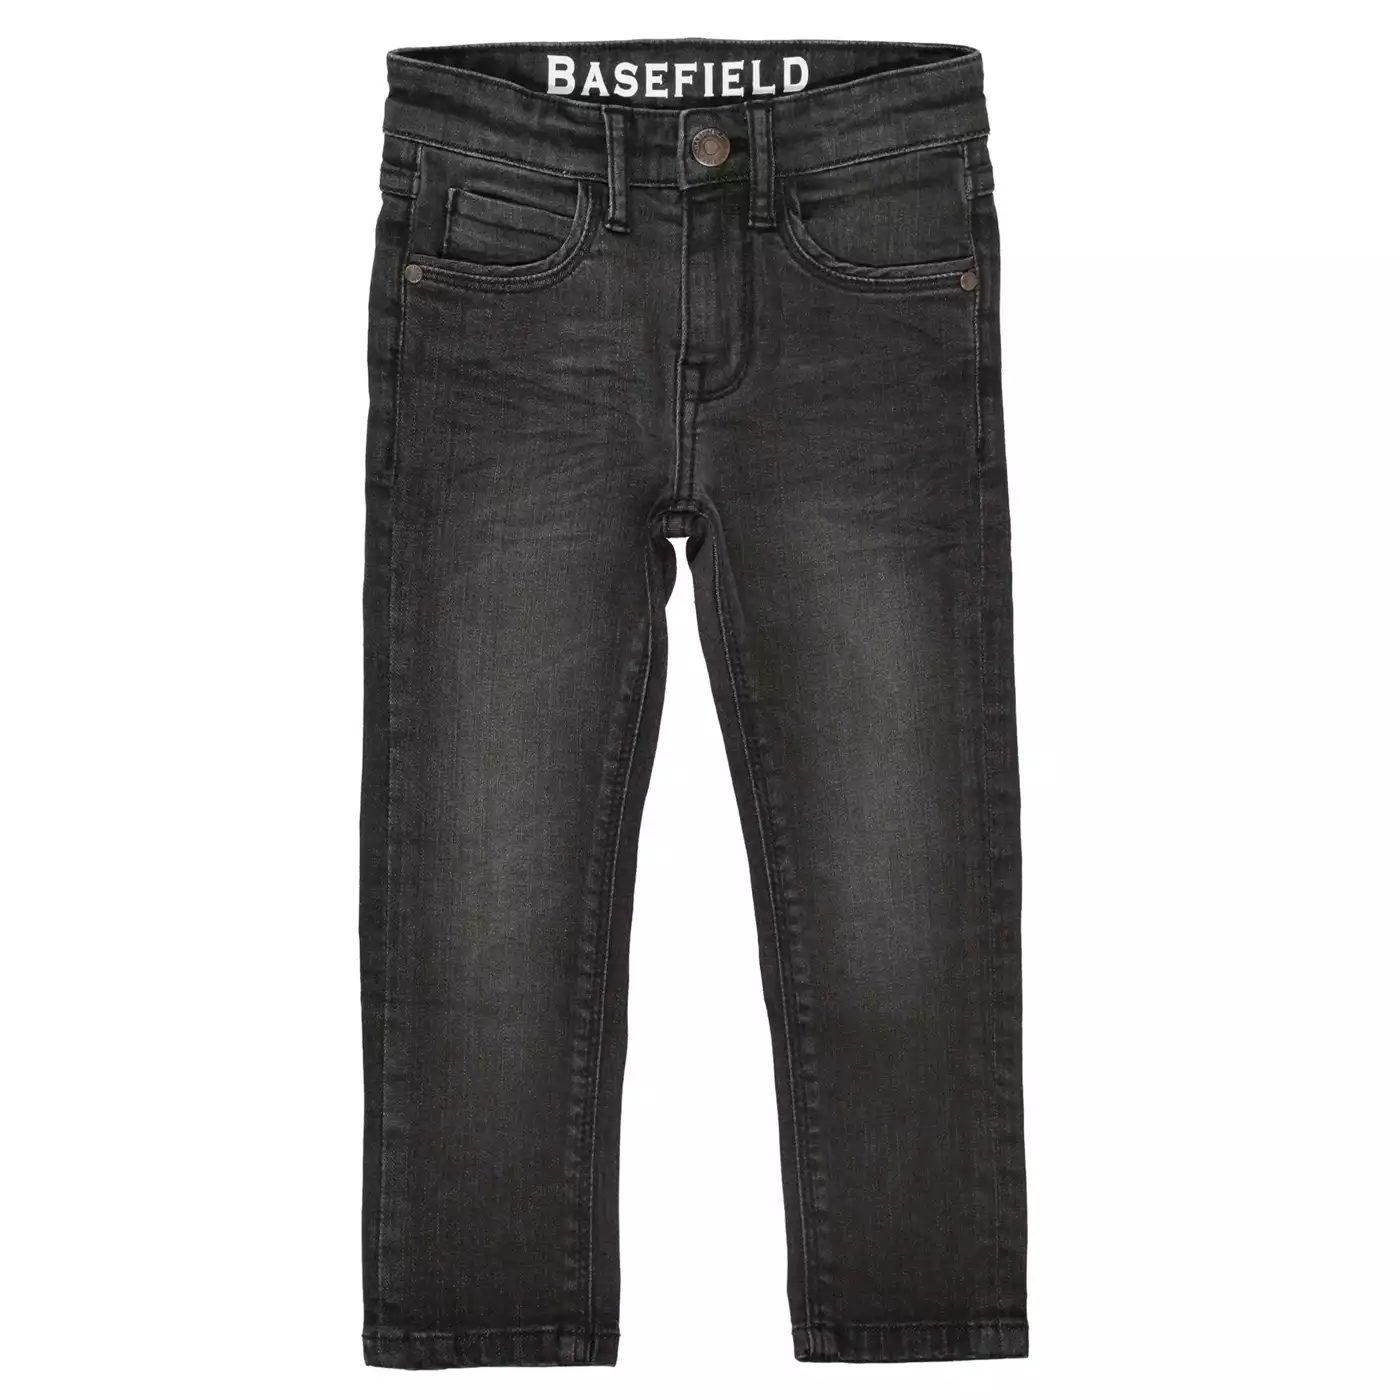 Jeans BASEFIELD Grau Anthrazit Blau M2010580549200 1